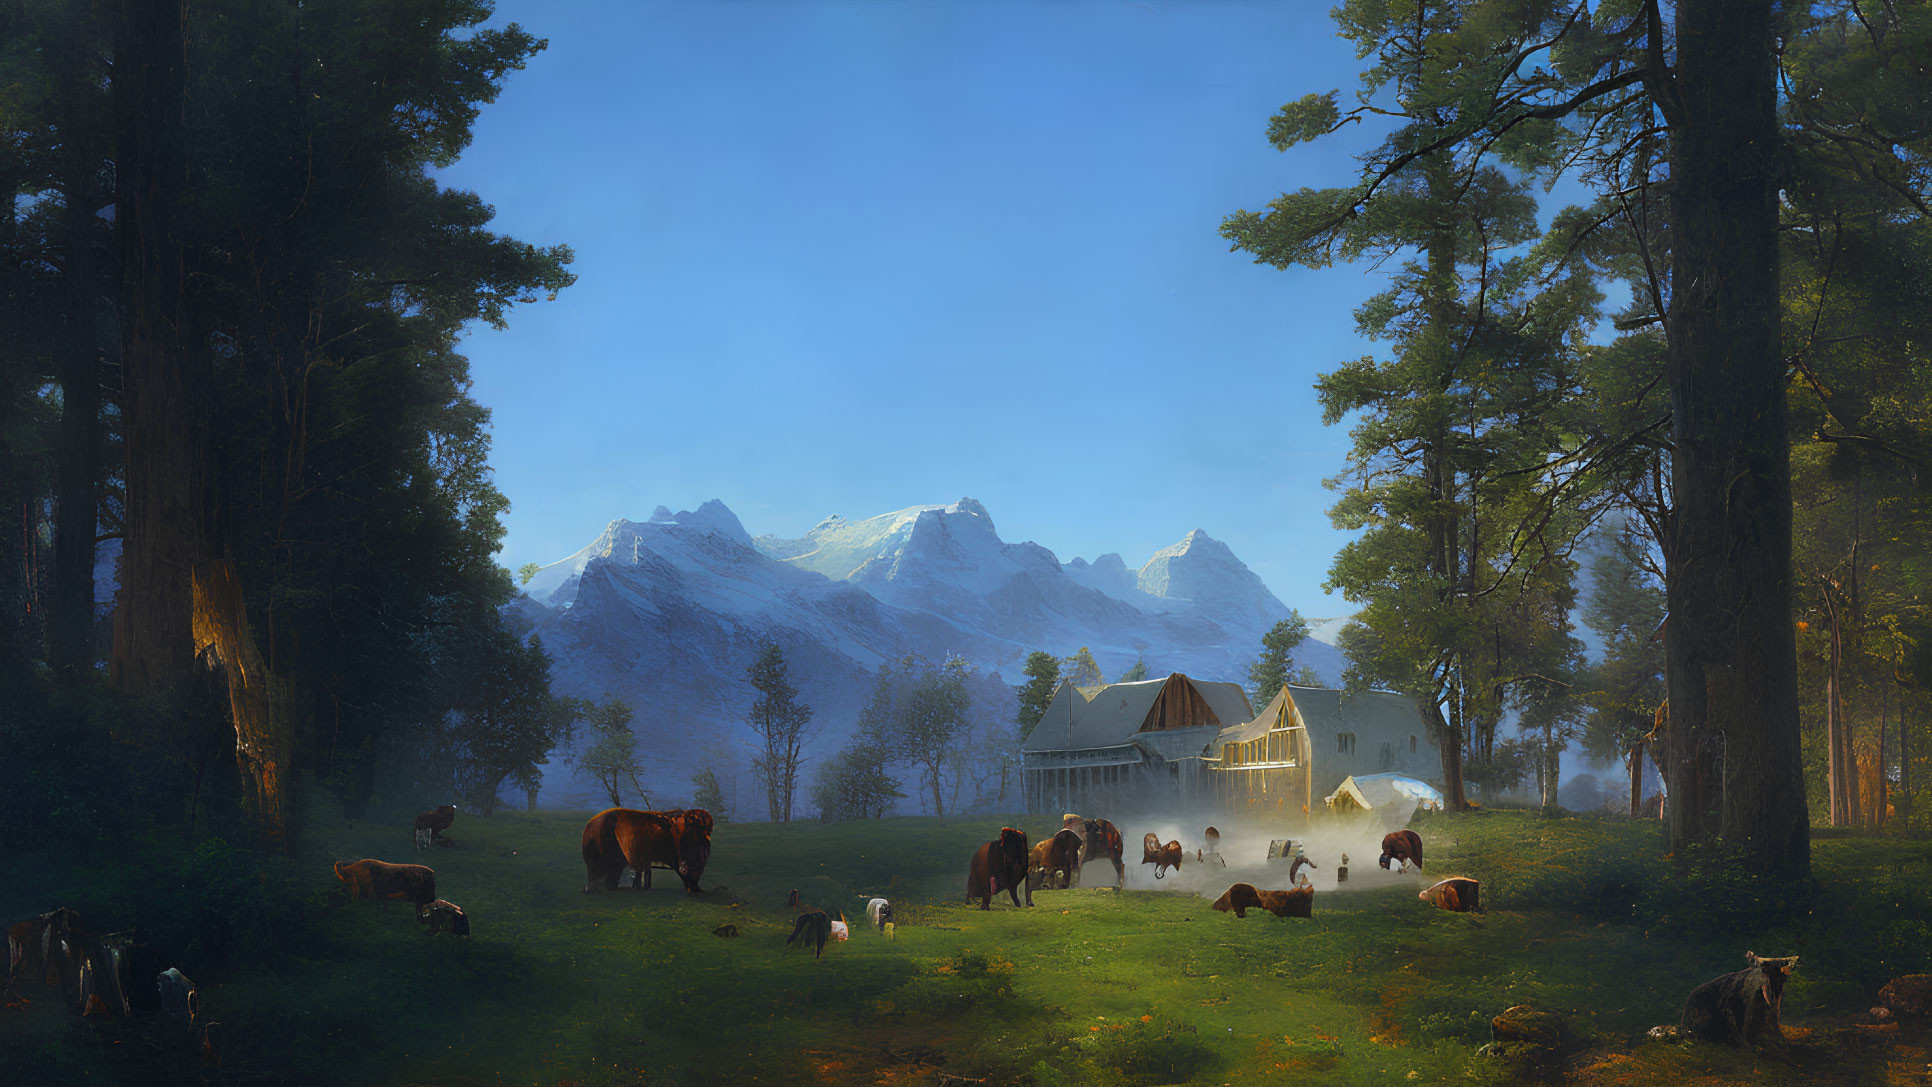 Cows grazing near white house in serene landscape